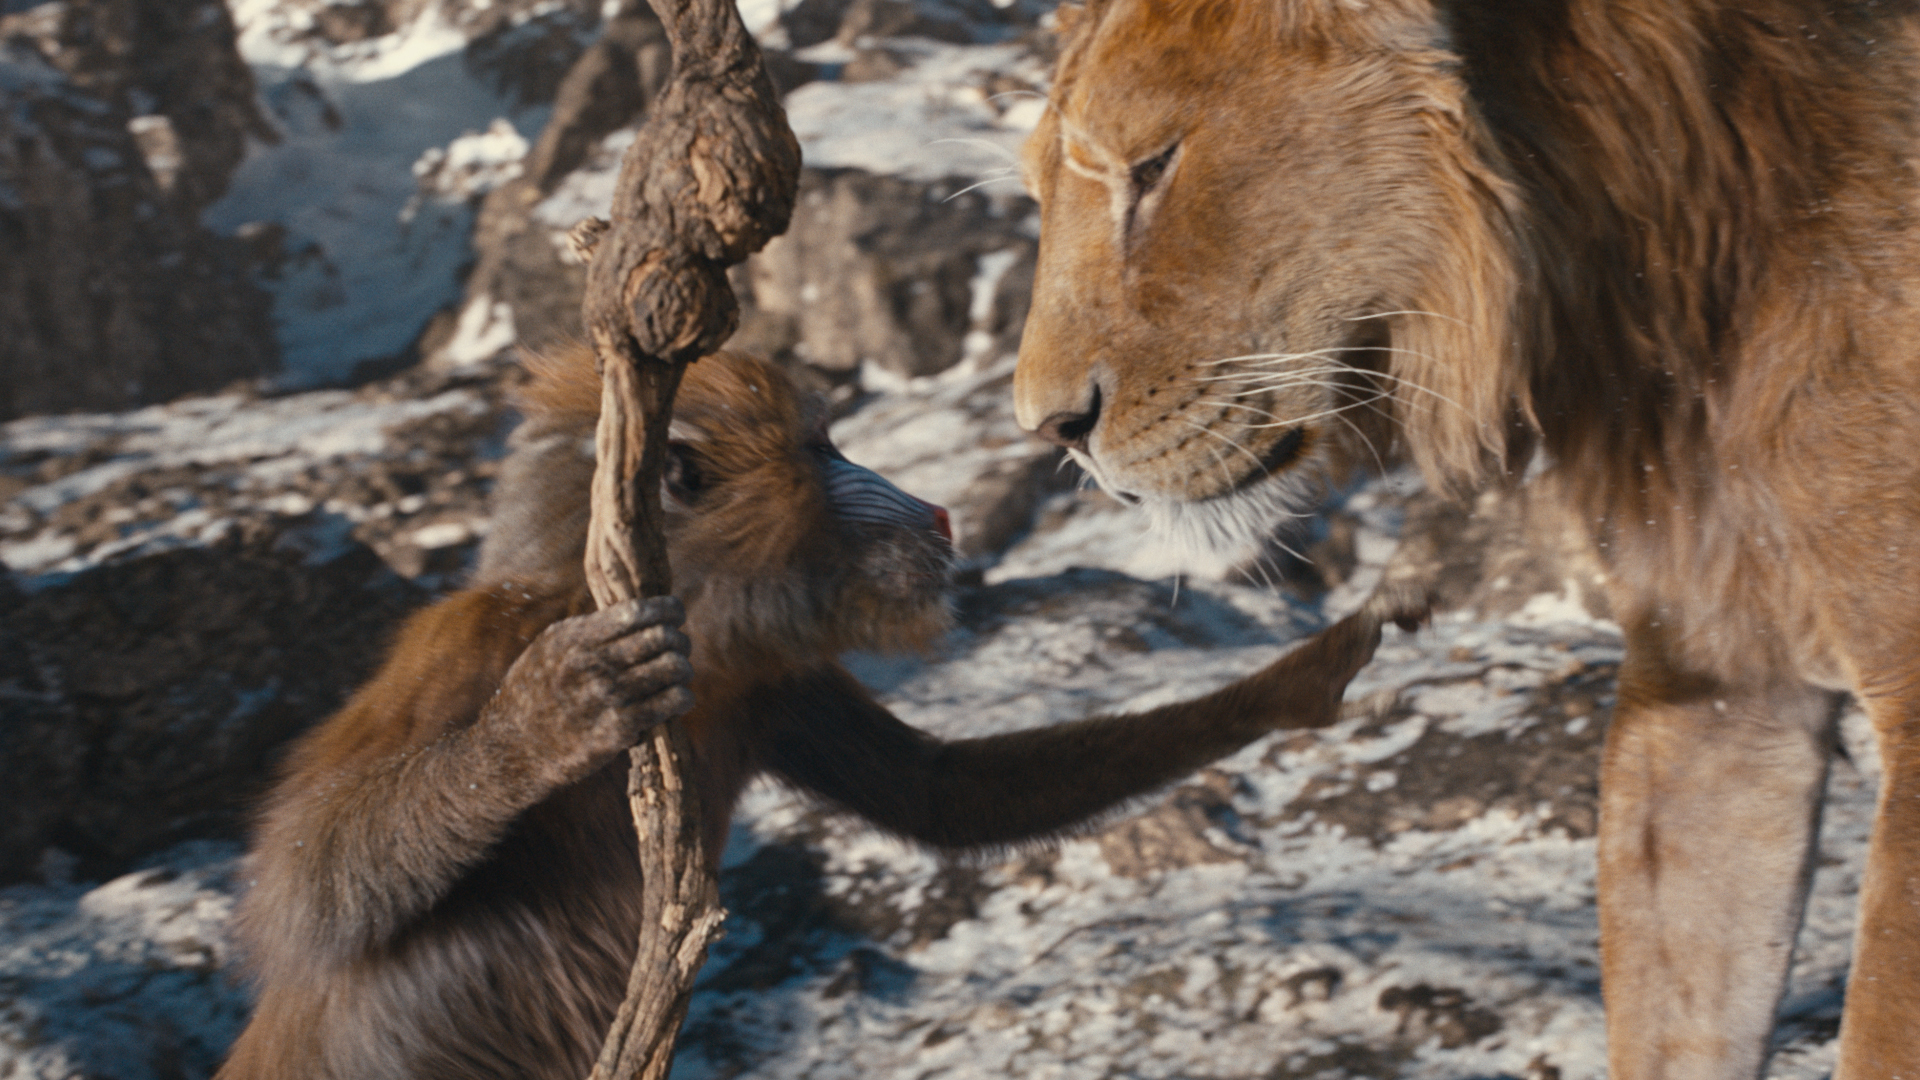 Rafiki and Mufasa share a tender moment in Mufasa: The Lion King